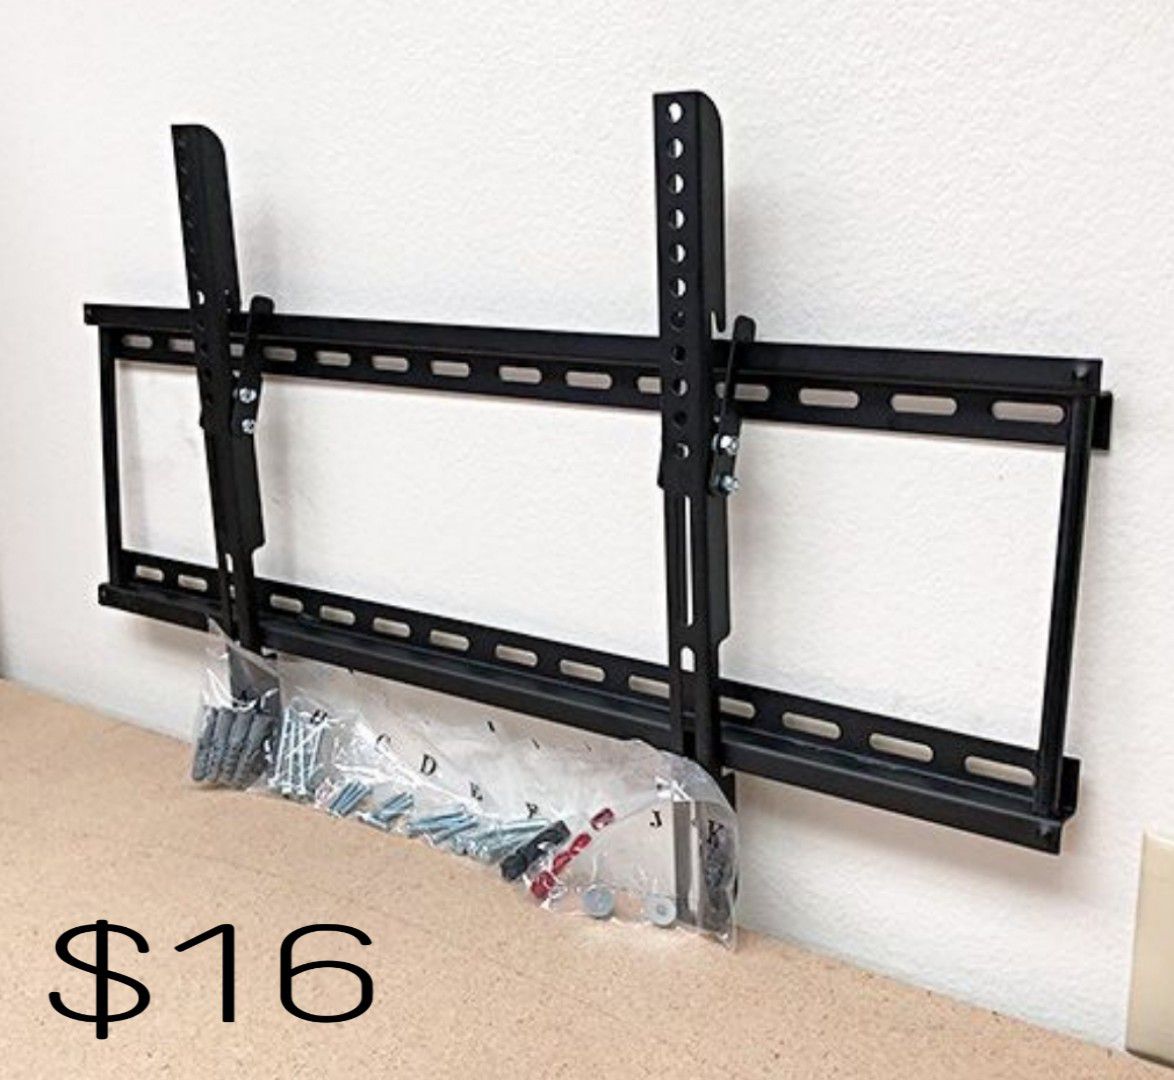 $16 TV Wall Mount. Universal Fit for TVs 32-65inches./ soporte de pared para tv. Para televisores de 32-65 pulgadas.